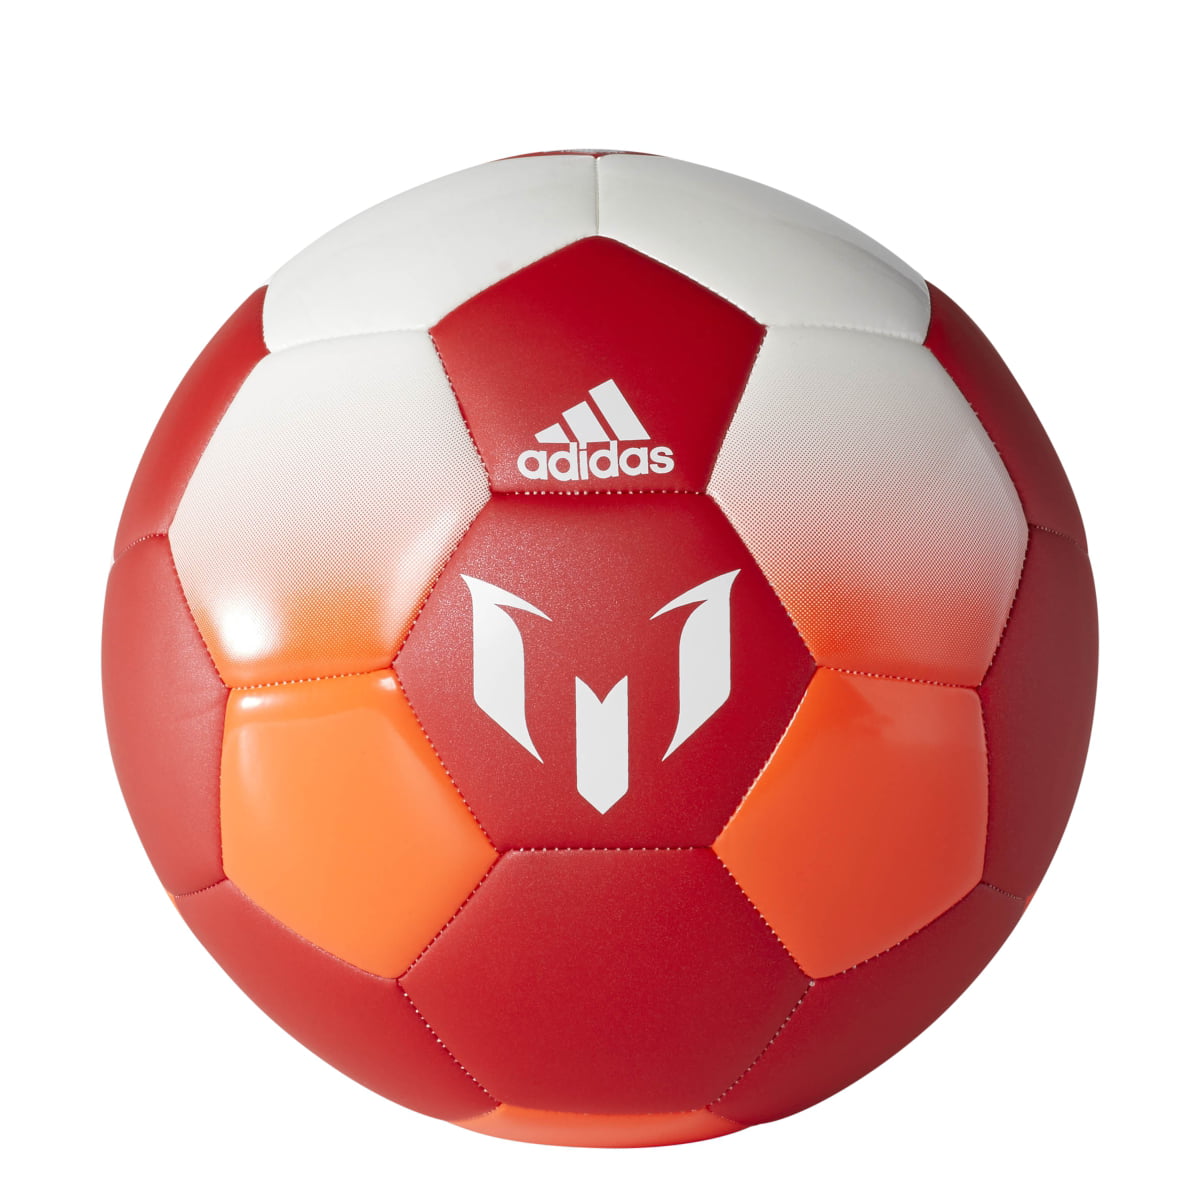 adidas Messi Q1 Soccer Ball - Walmart 